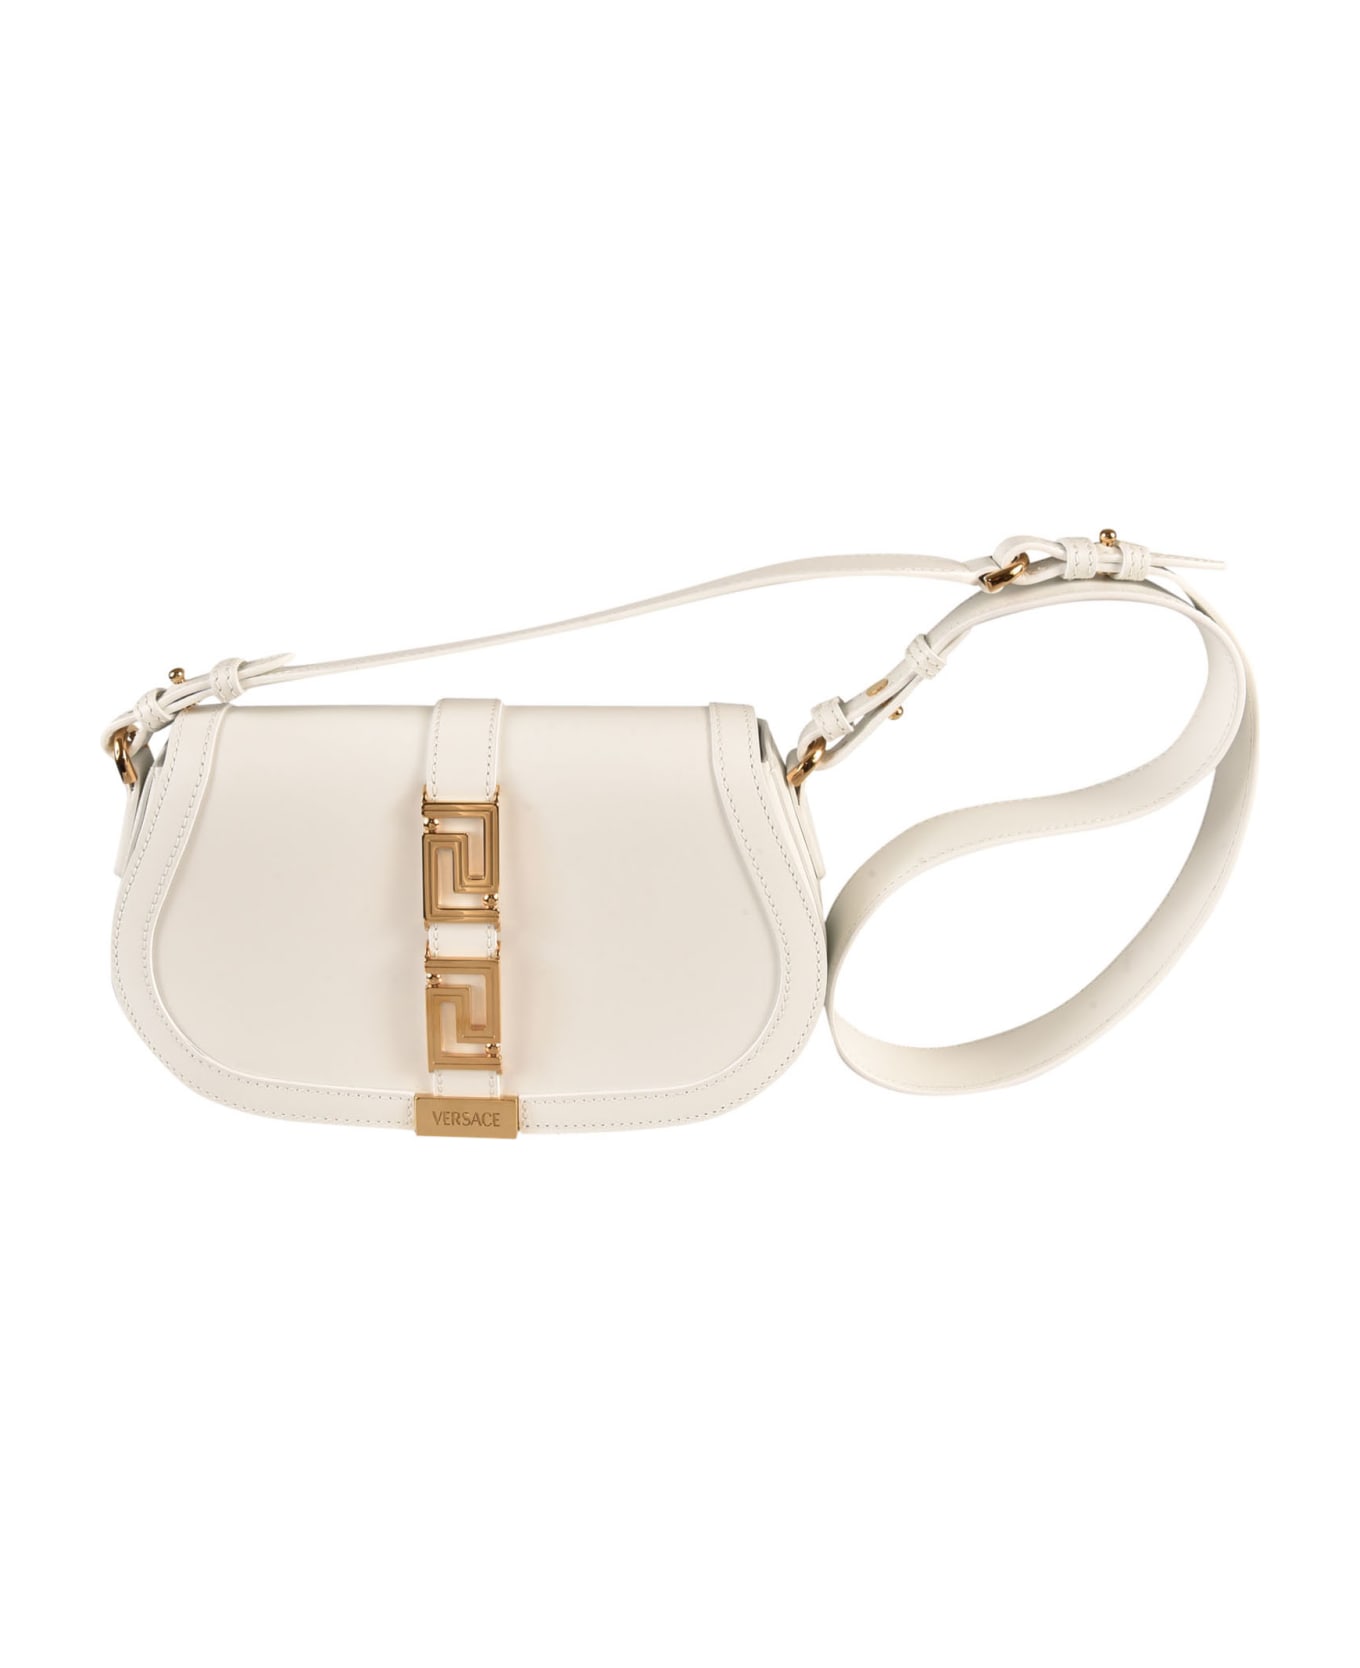 Versace Greca Goddess Shoulder Bag - Optic White/Versace Gold